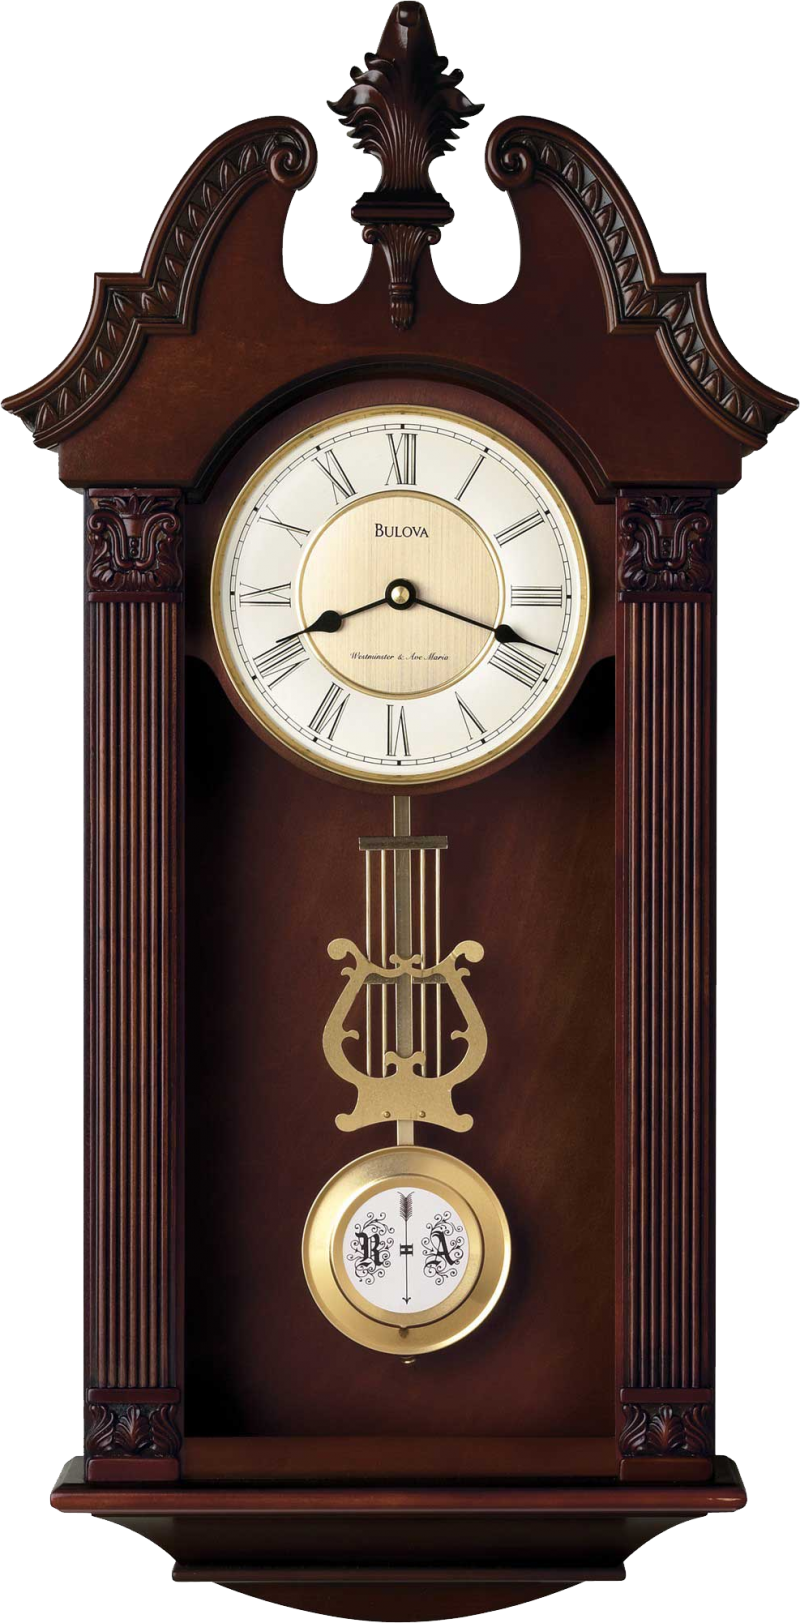 Wall Bell Clock PNG Image - PurePNG | Free transparent CC0 PNG Image ...